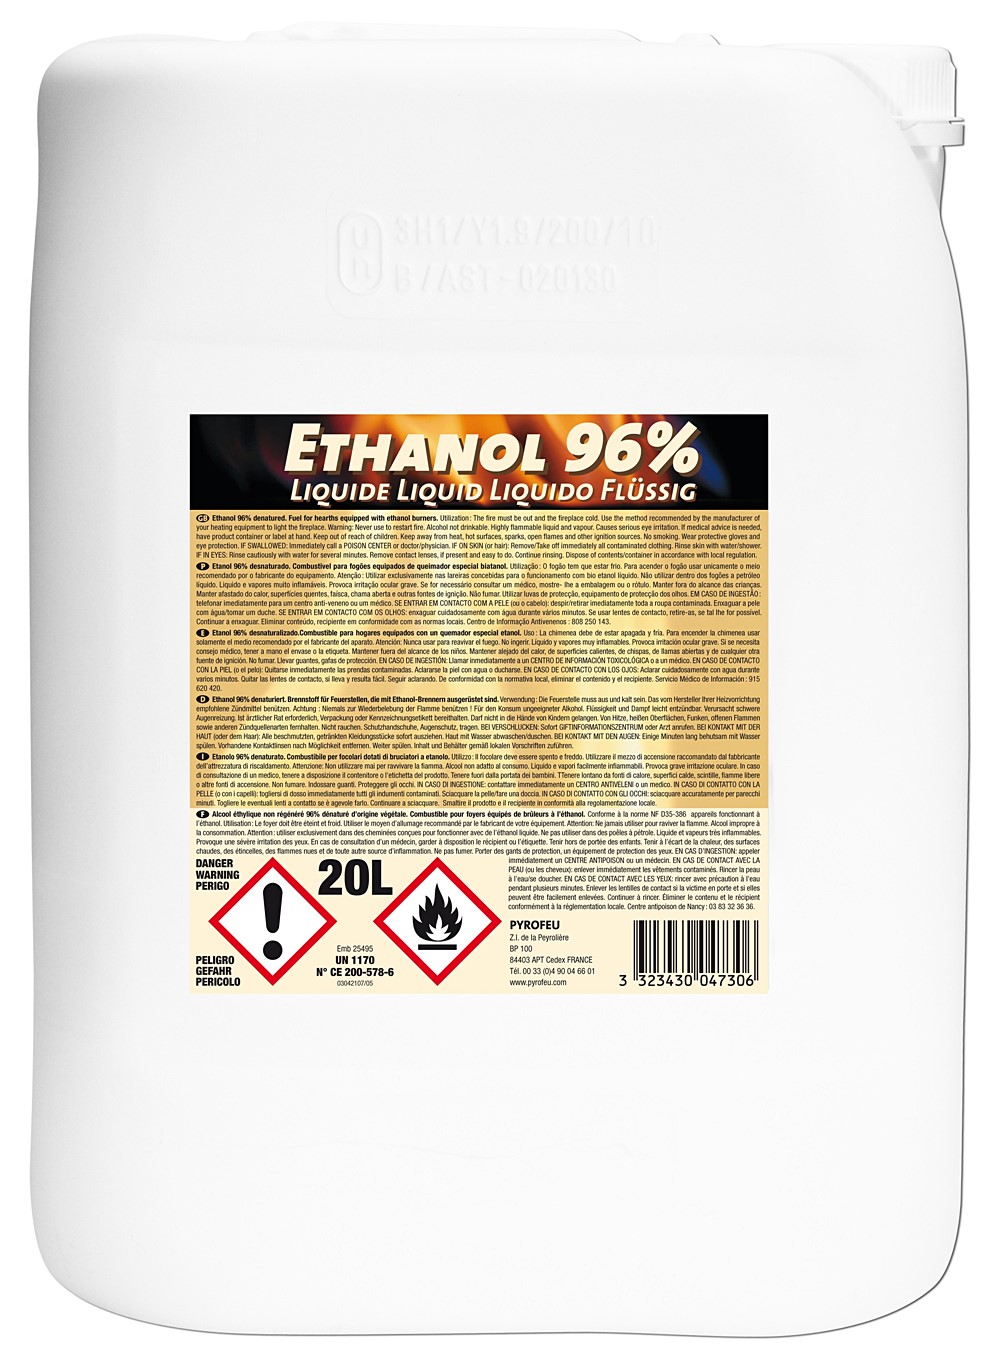 Ethanol 96% en bidon de 20 L